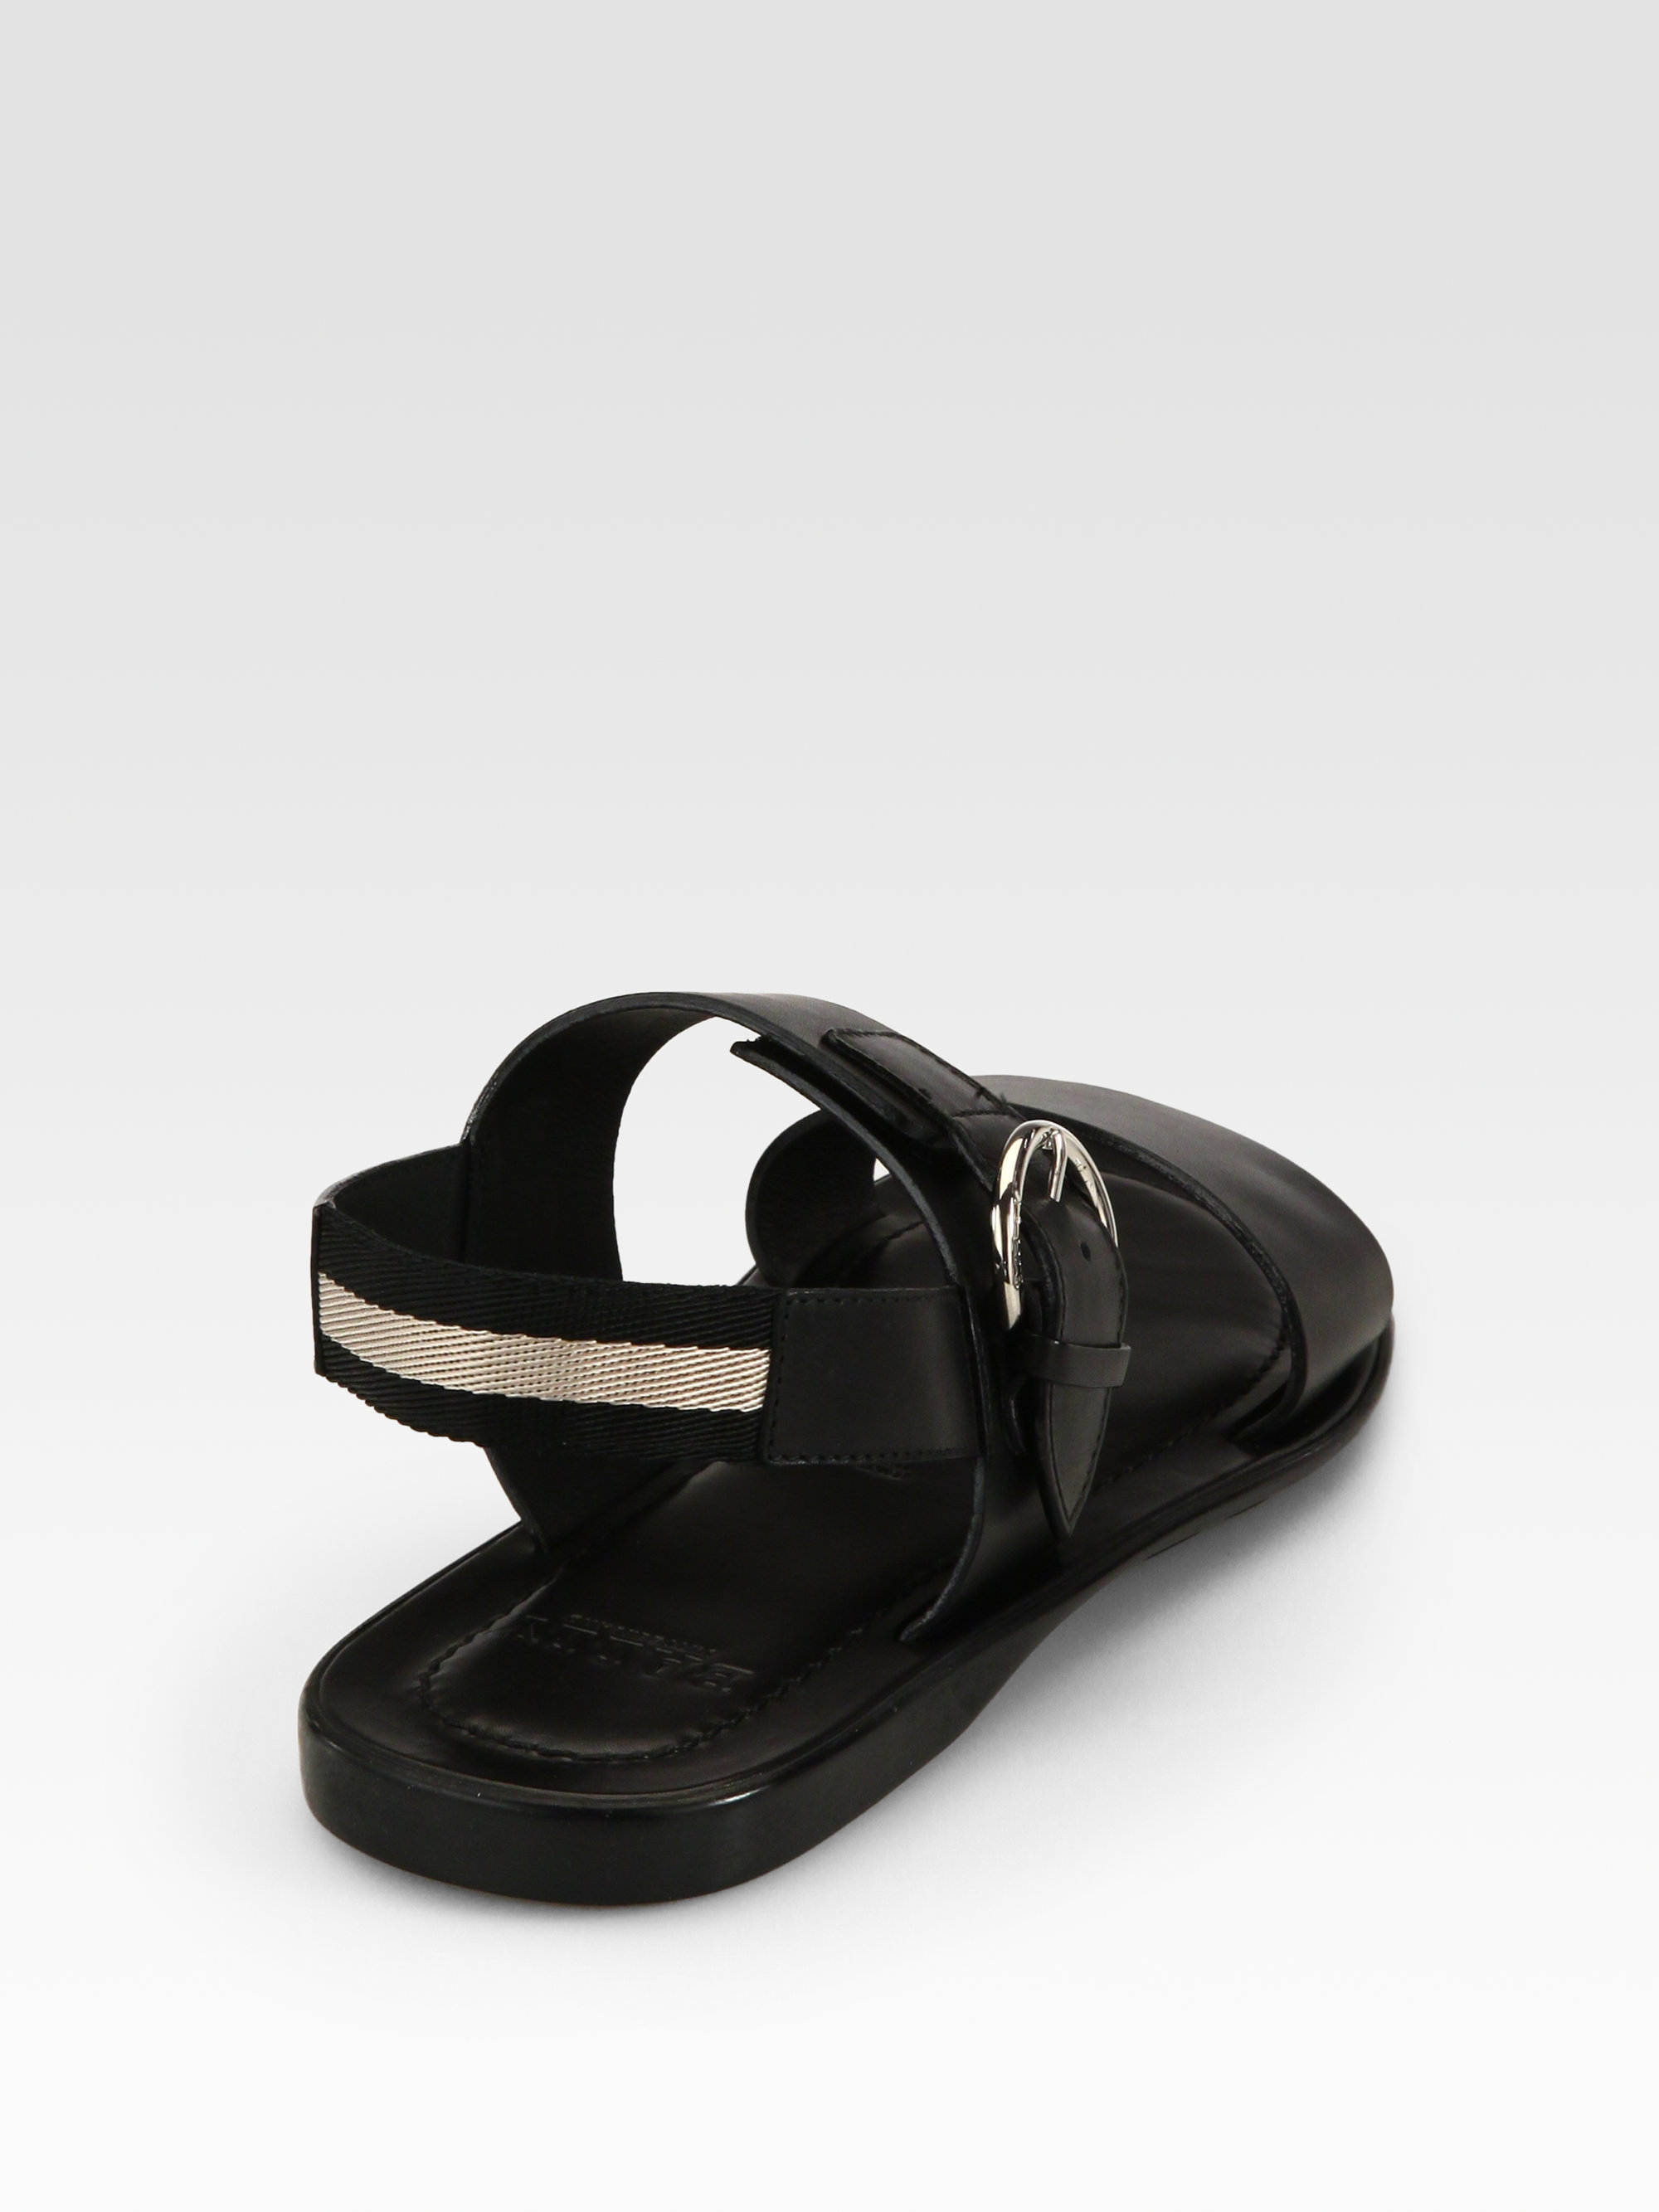 Lyst - Bally Brioso Closedback Sandals in Black for Men